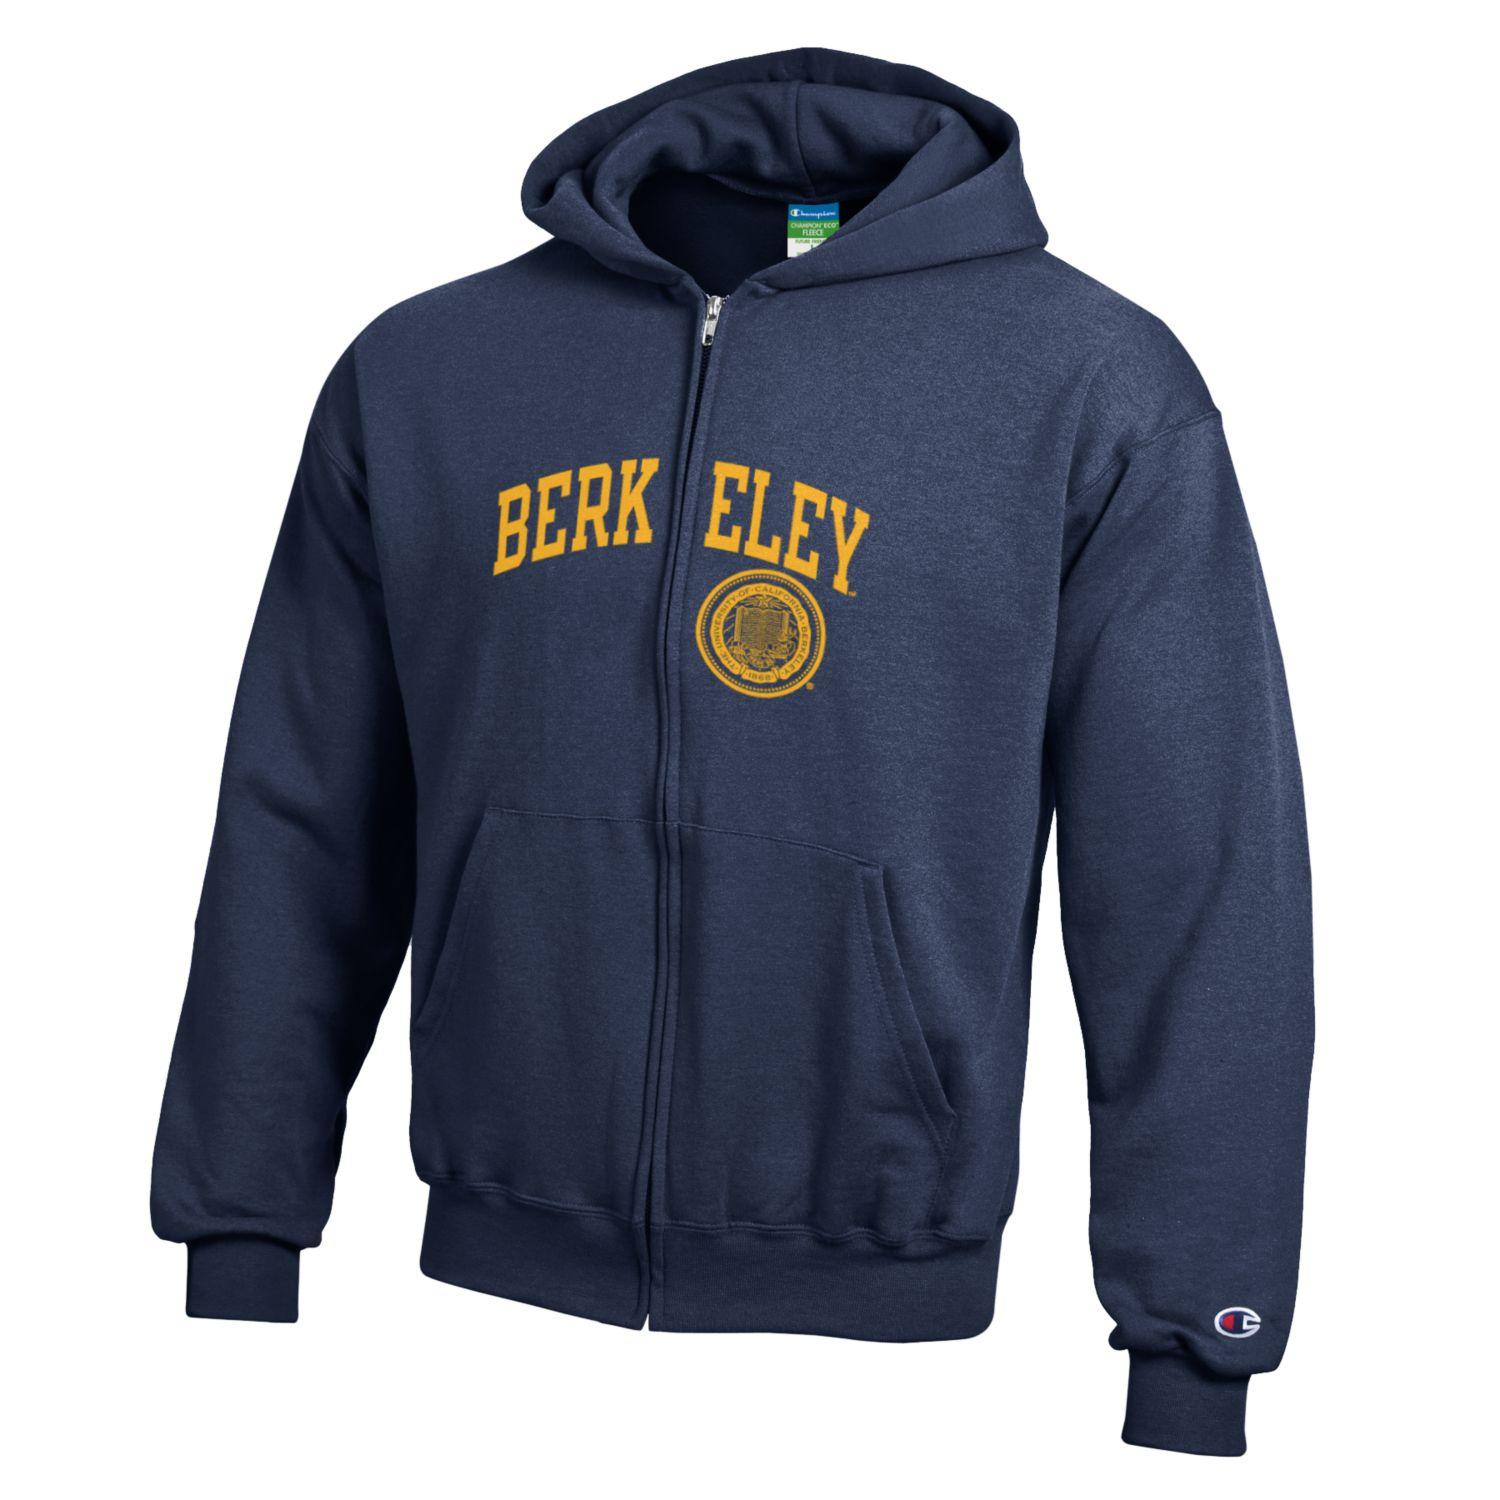 U.C. Berkeley arch & seal youth zip-up hoodie sweatshirt-Navy-Shop College Wear